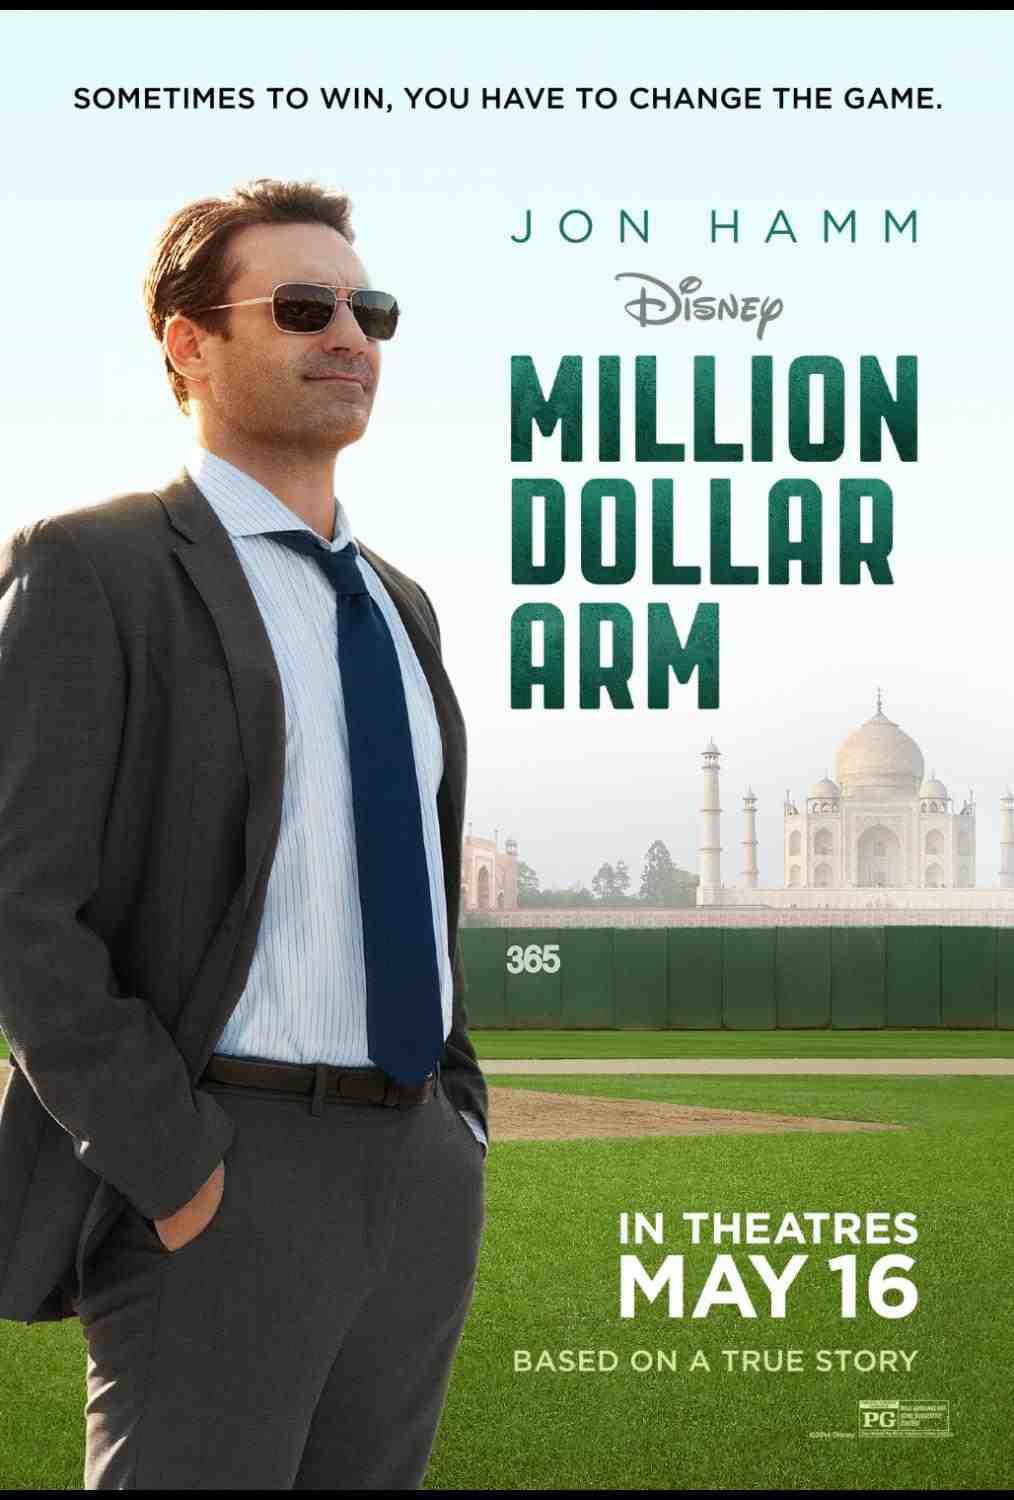 Jon Hamm in Million Dollar Arm